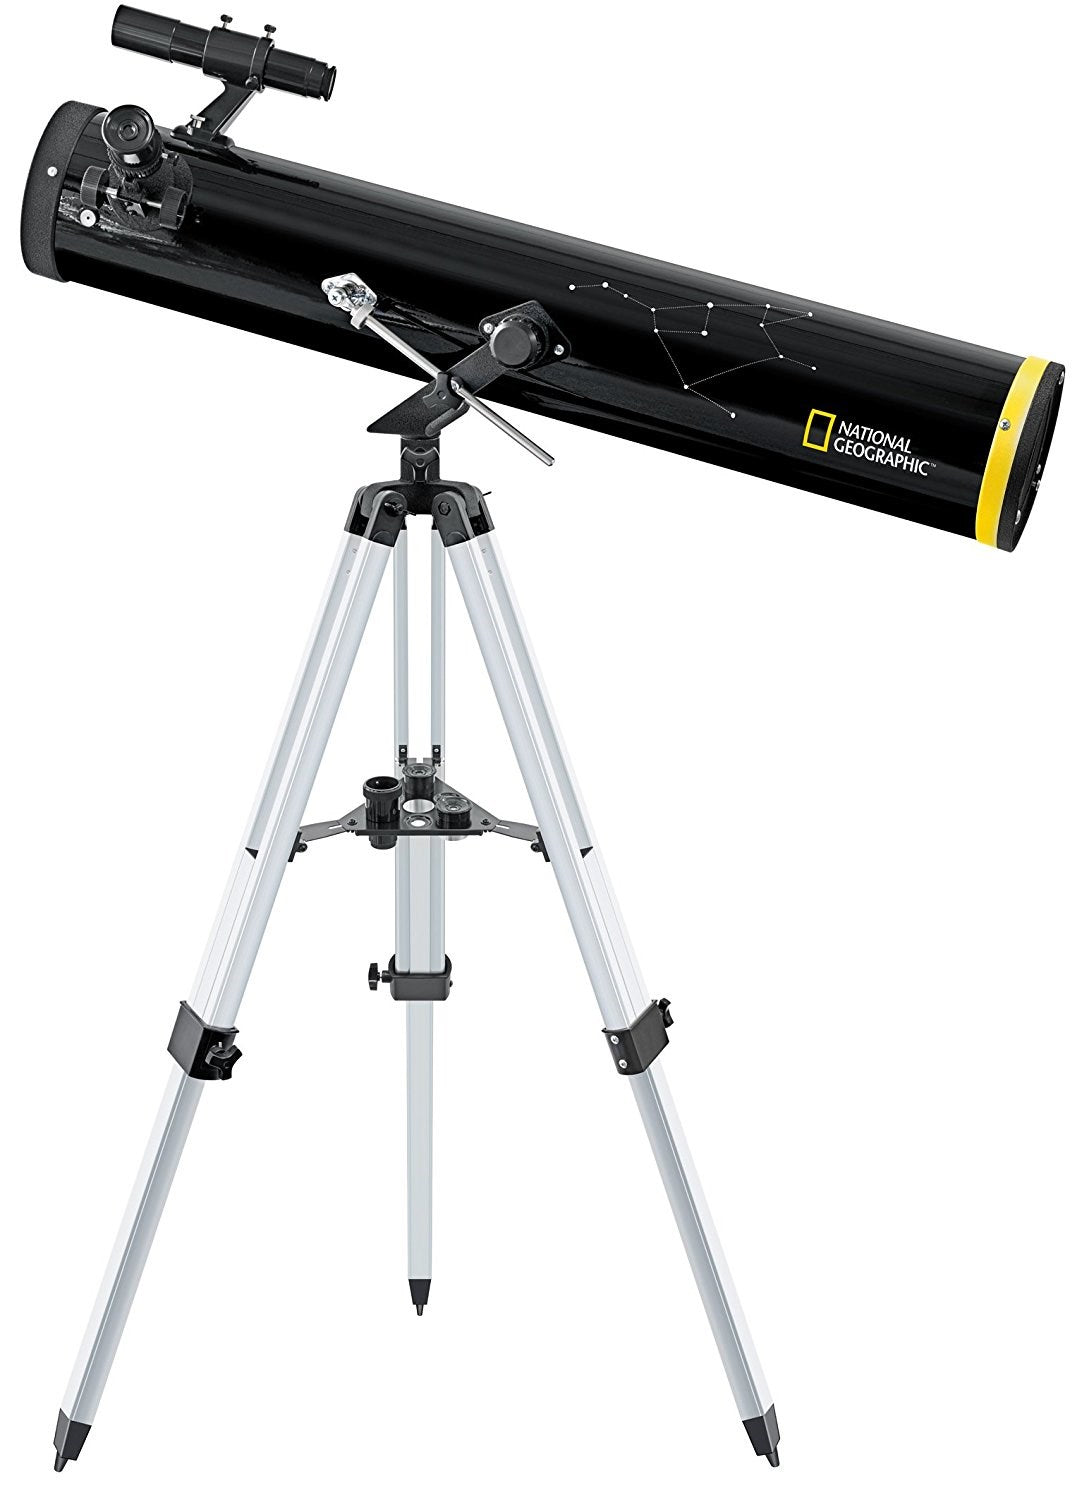 Product Image of National Geographic Newtonian Telescope 114 - 900 AZ with tripod